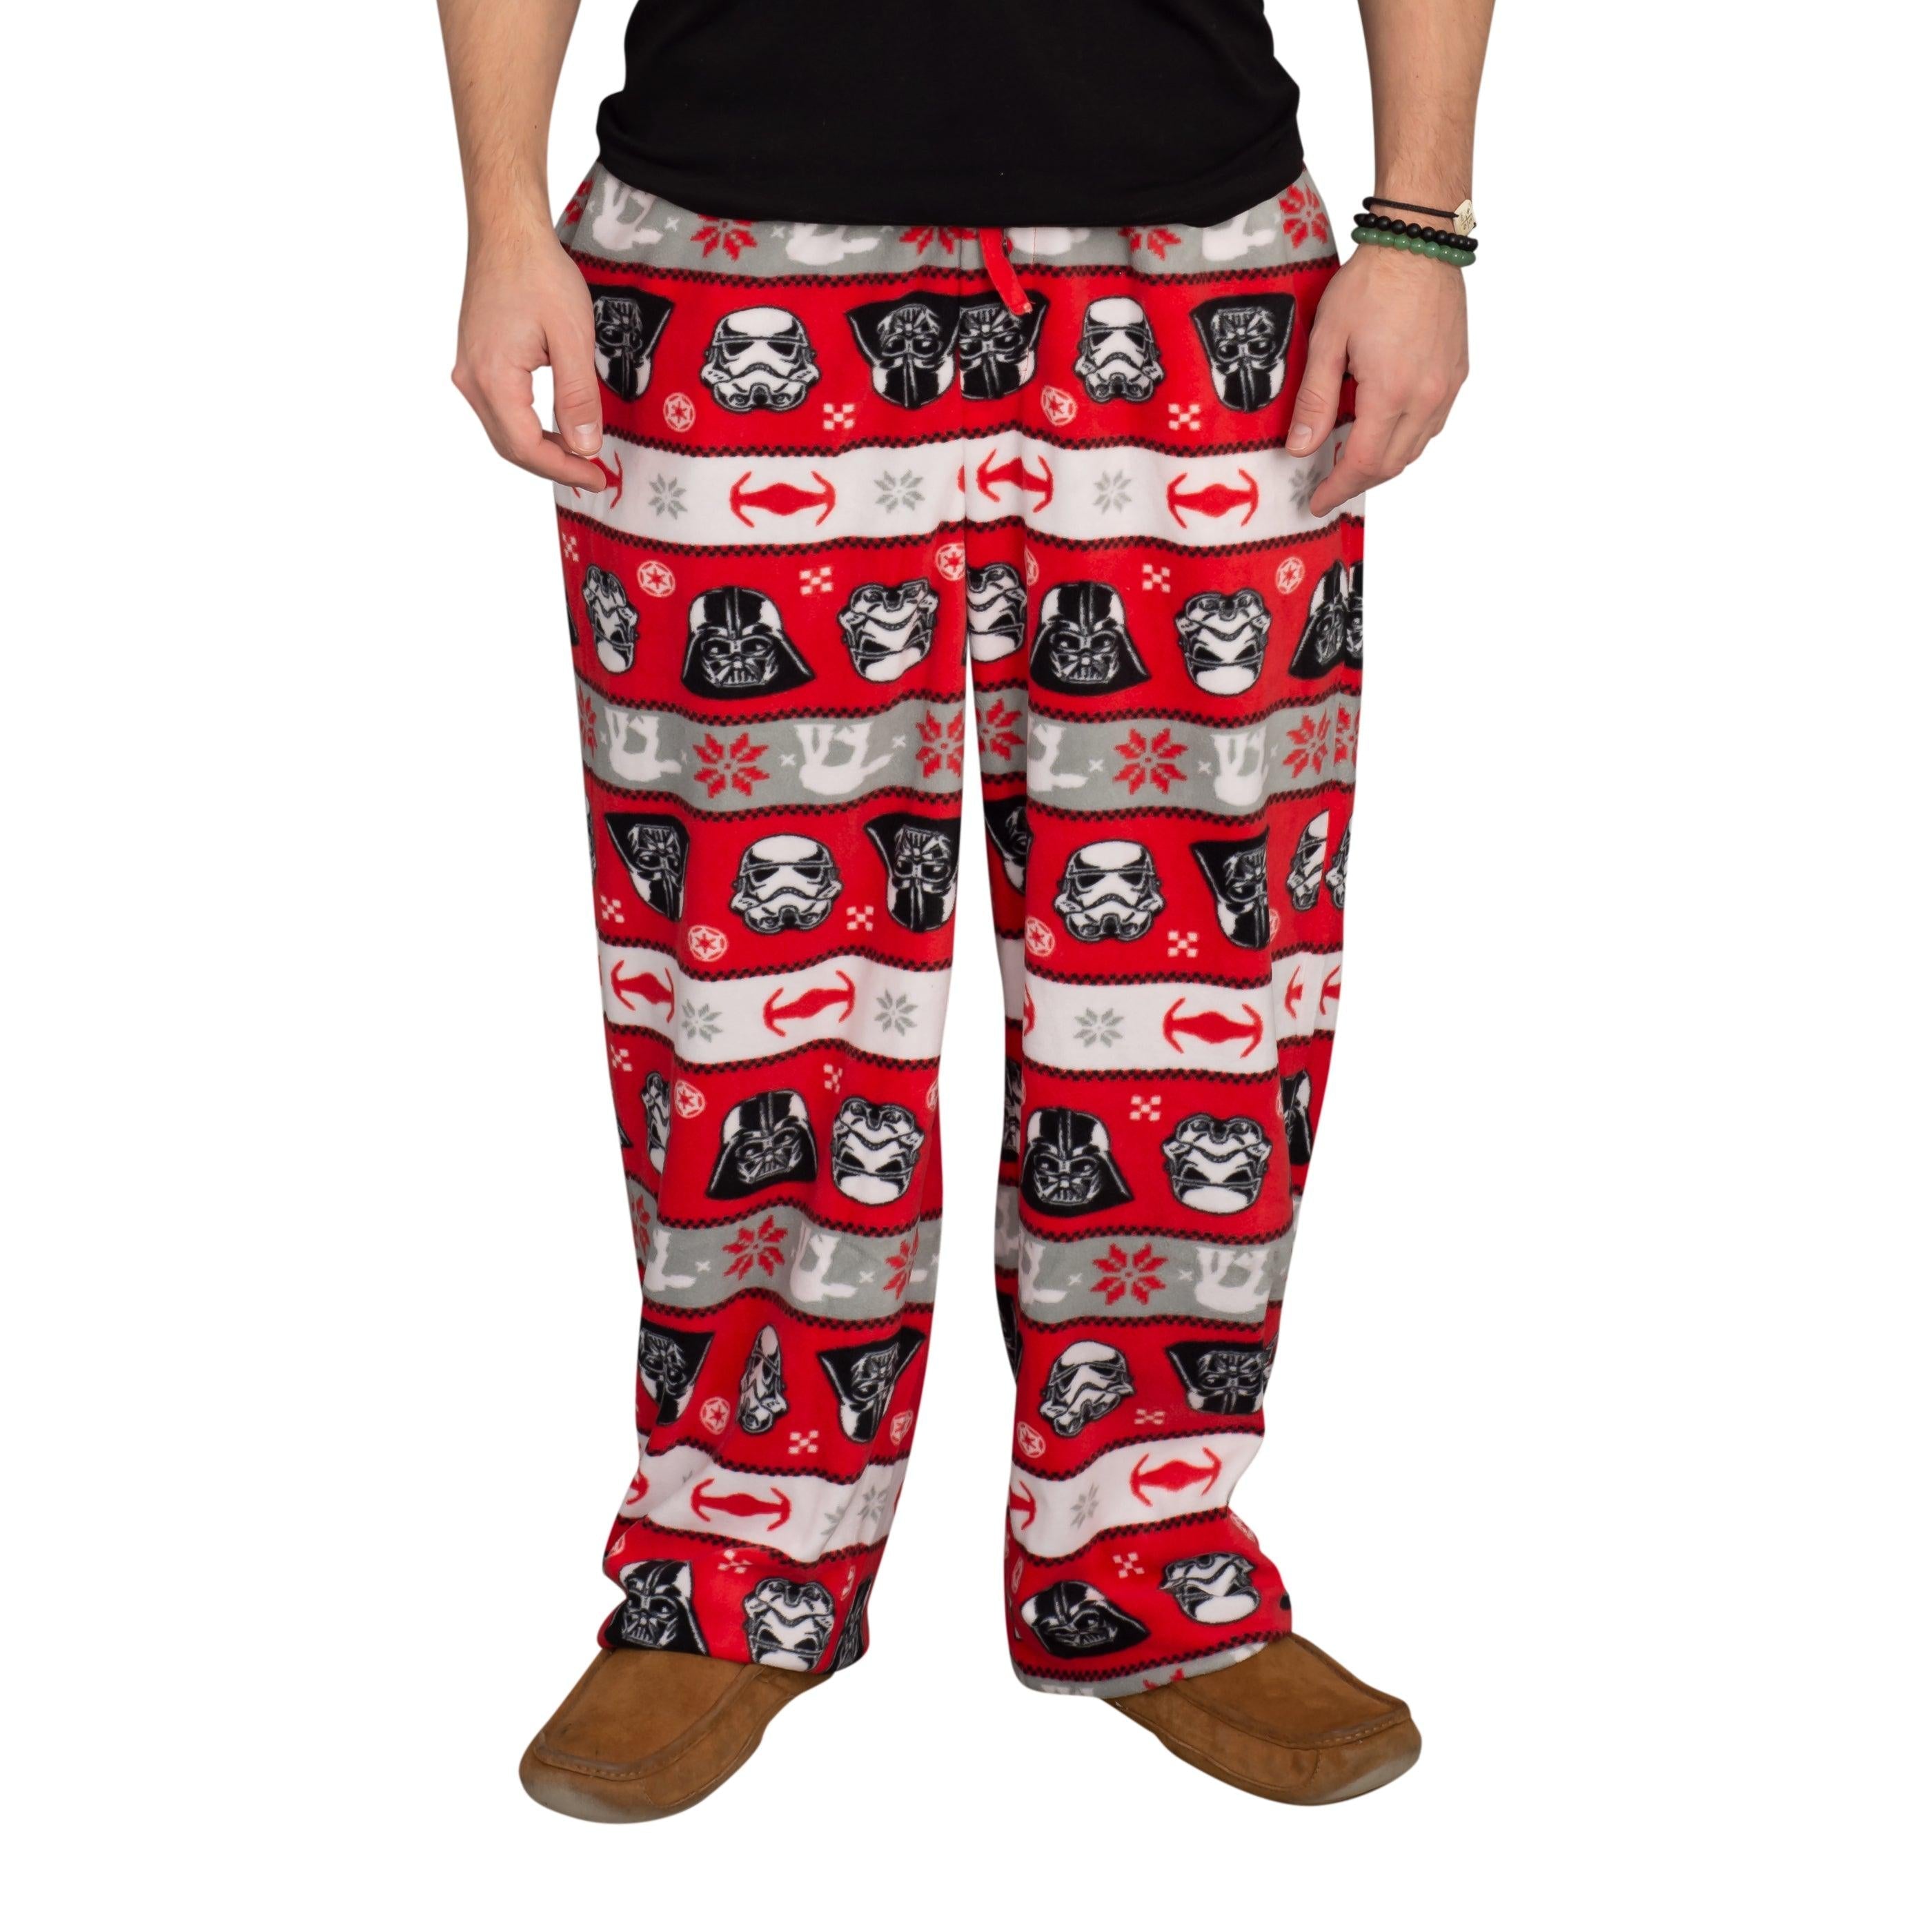 Star Wars Darth Vader Storm Trooper Red Pajama Lounge Pants